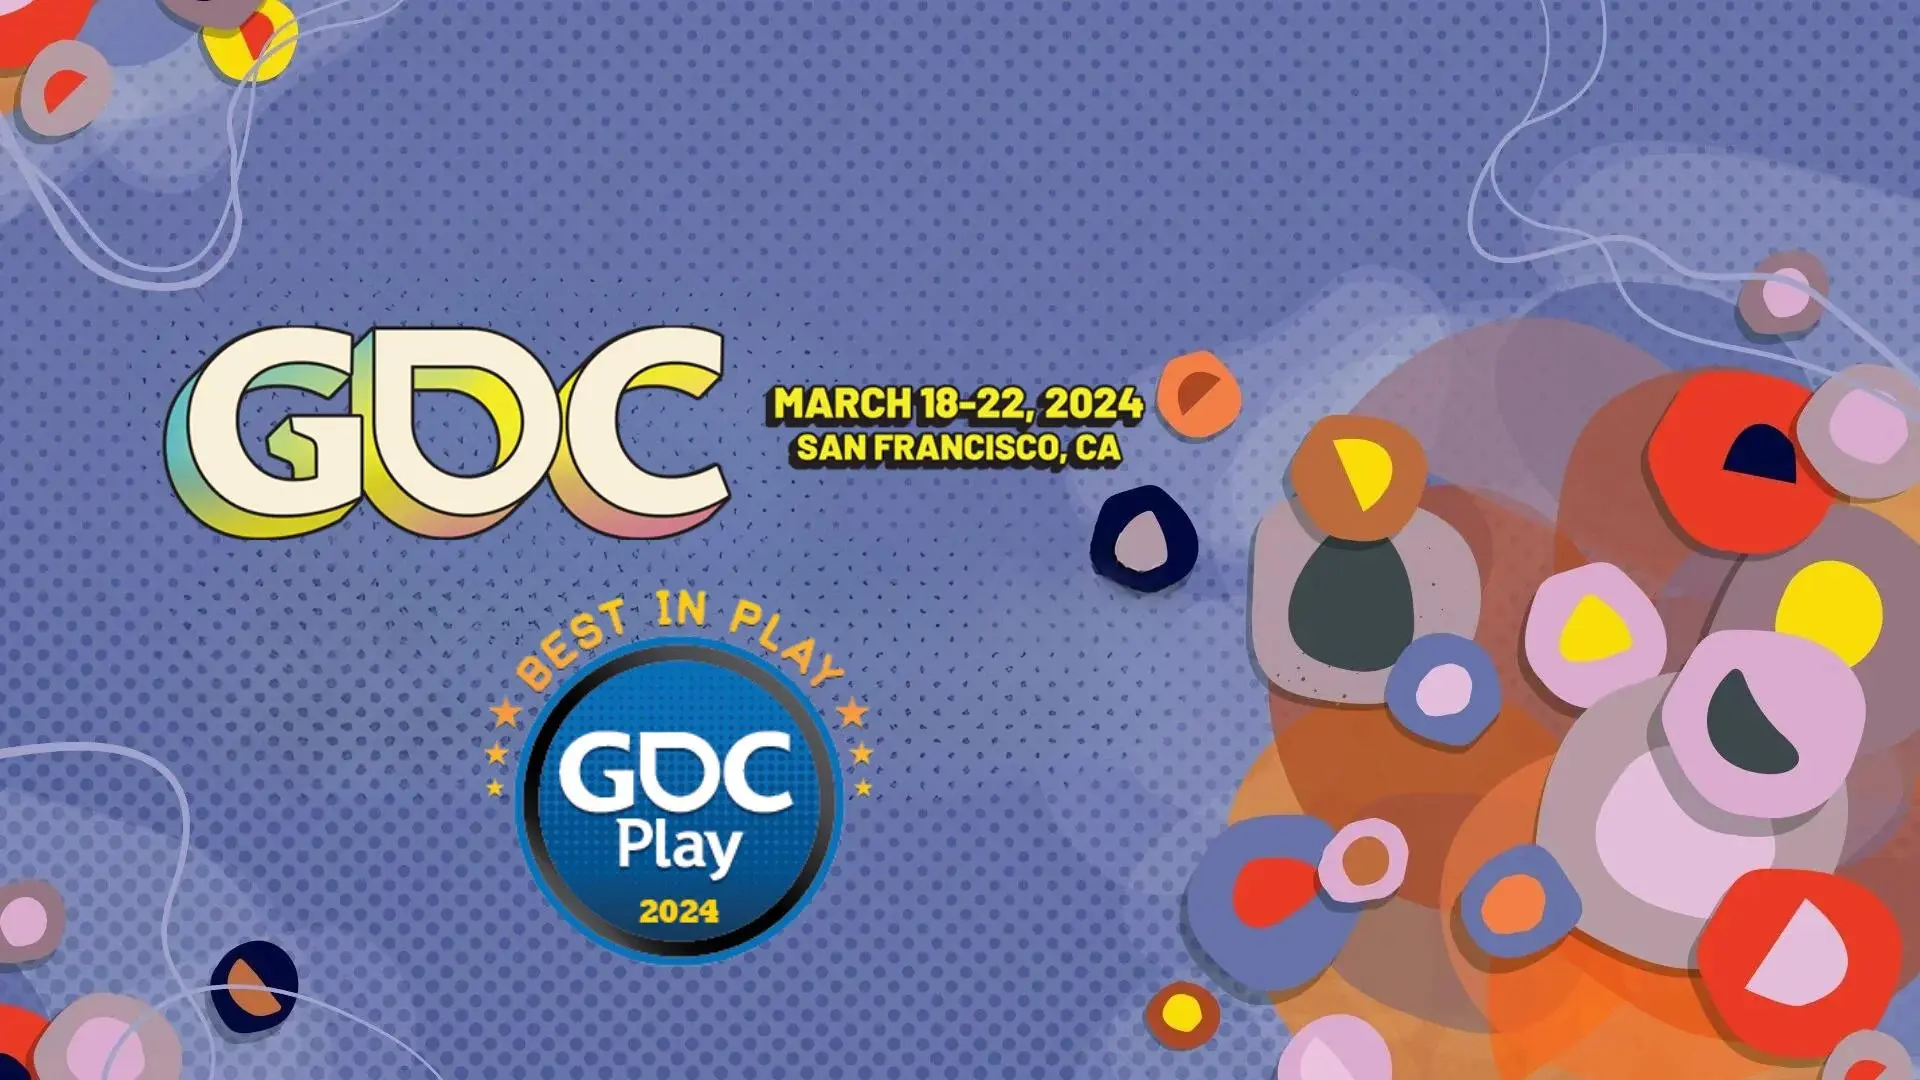 GDC: March 18-22, 2024 - San Francisco, CA. Best In Play: GDC Play 2024